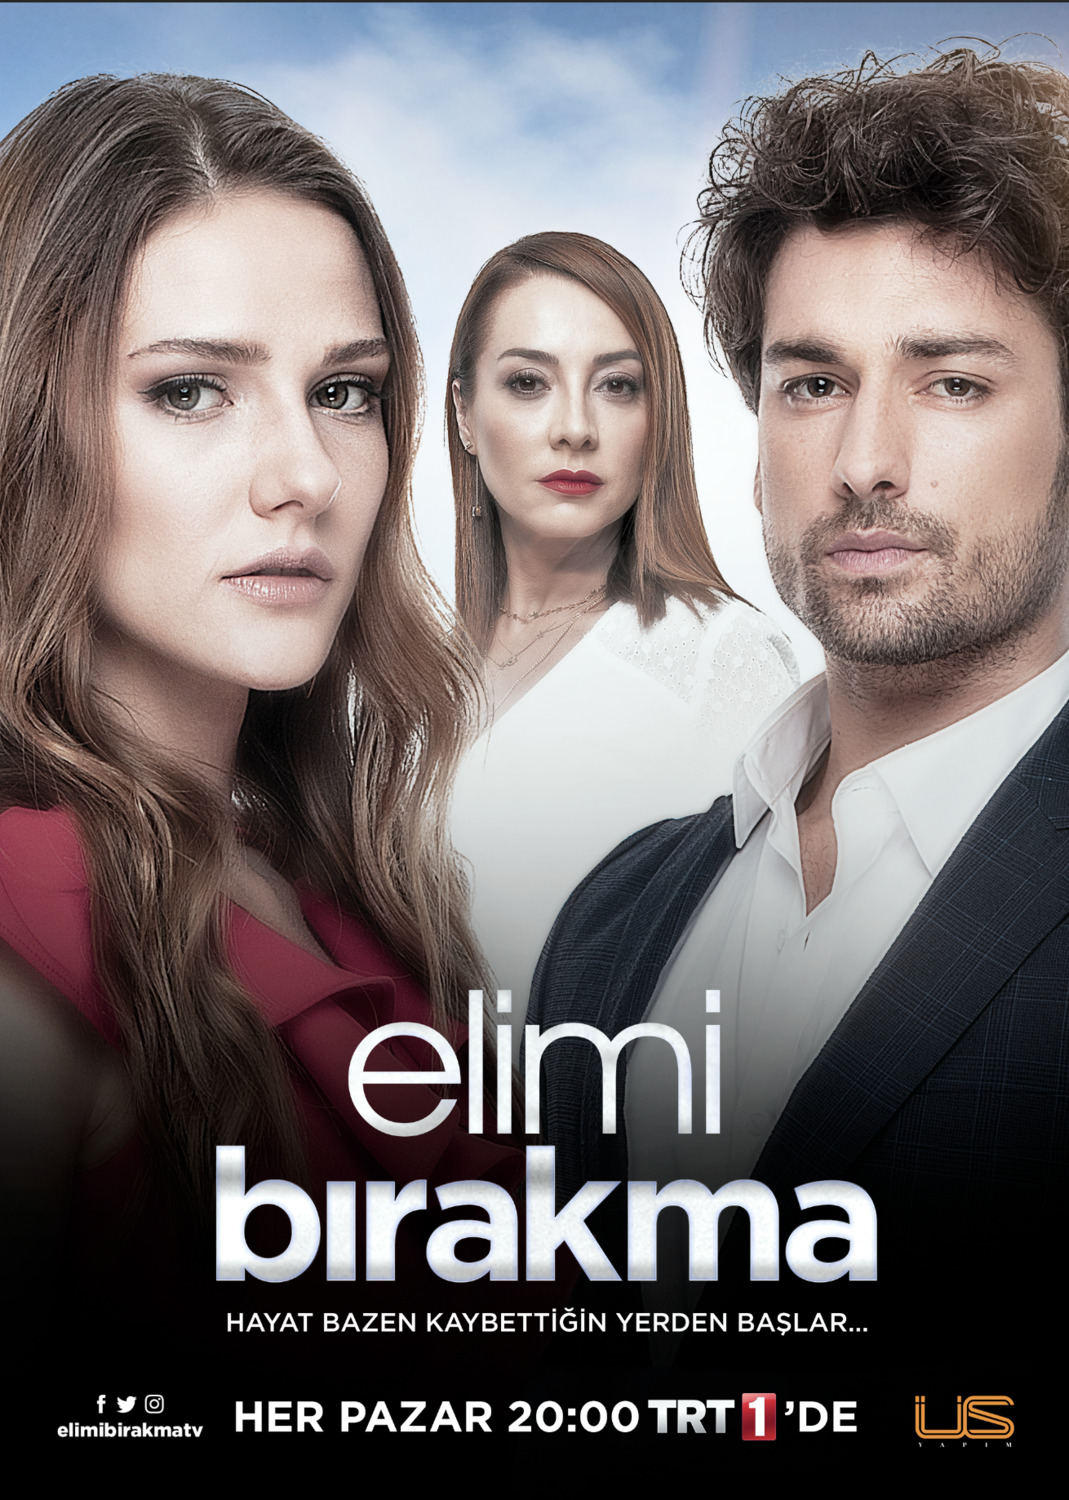 Extra Large TV Poster Image for Elimi birakma (#3 of 20)